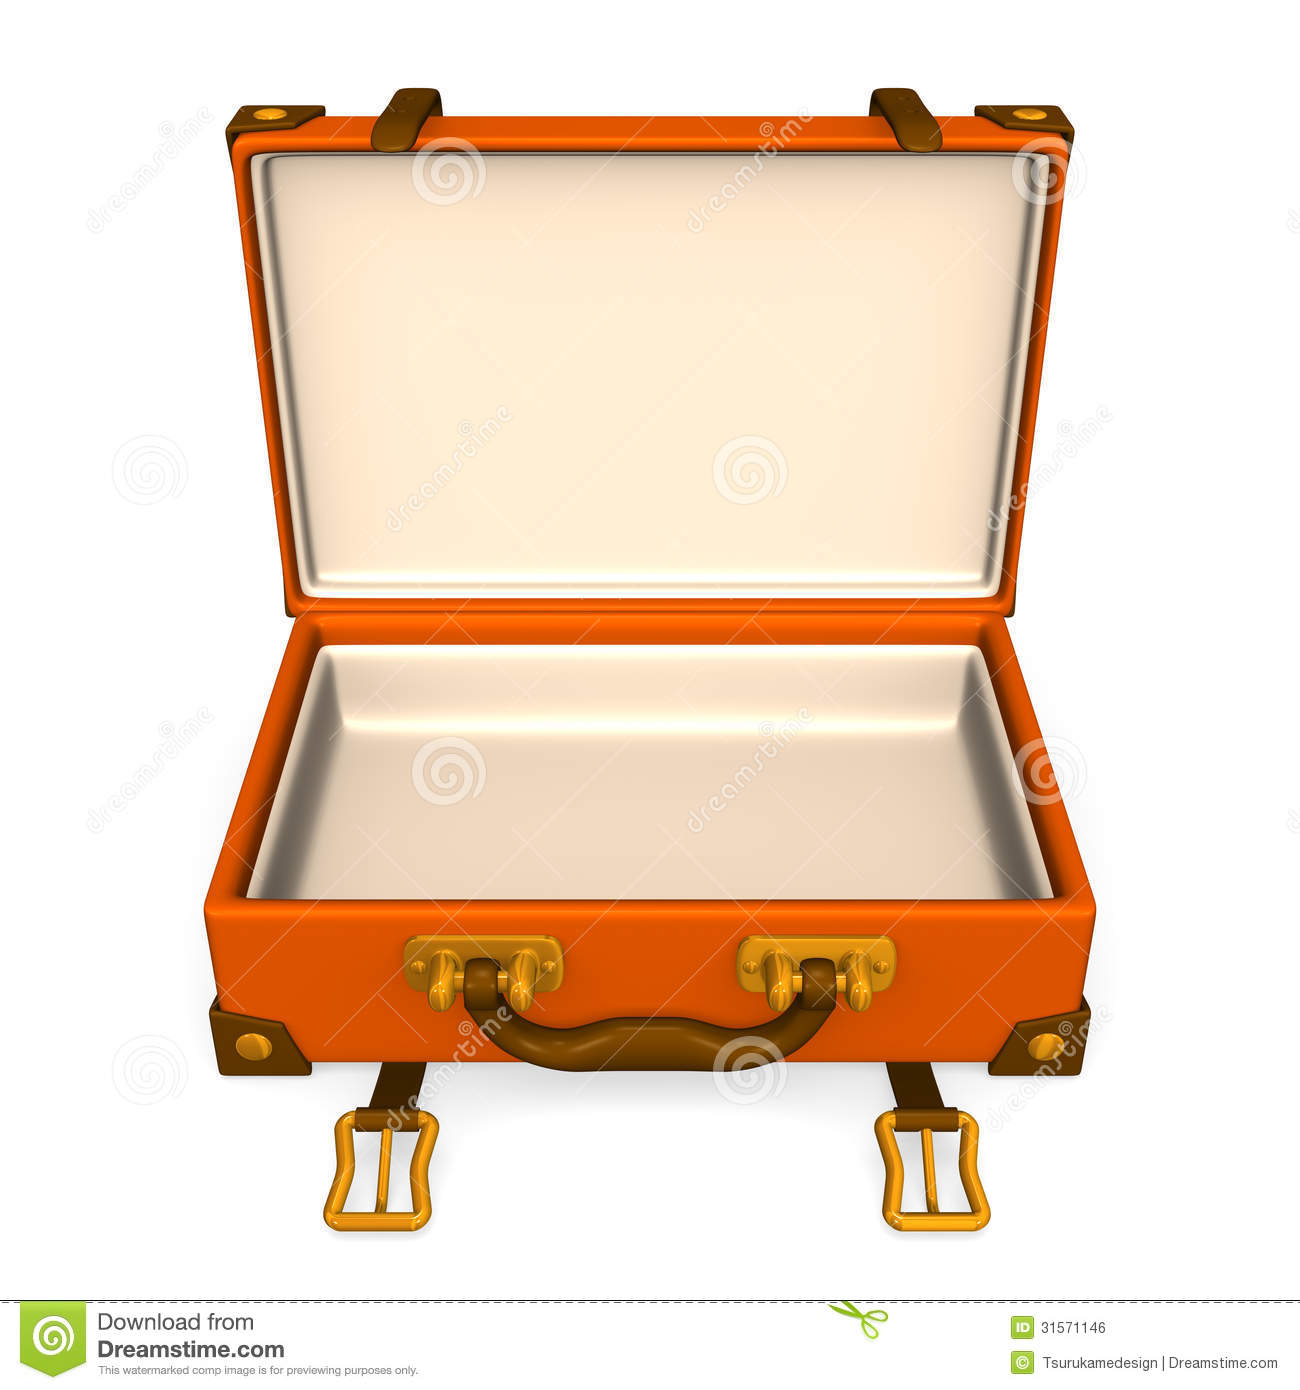 Briefcase clipart open suitcase, Briefcase open suitcase